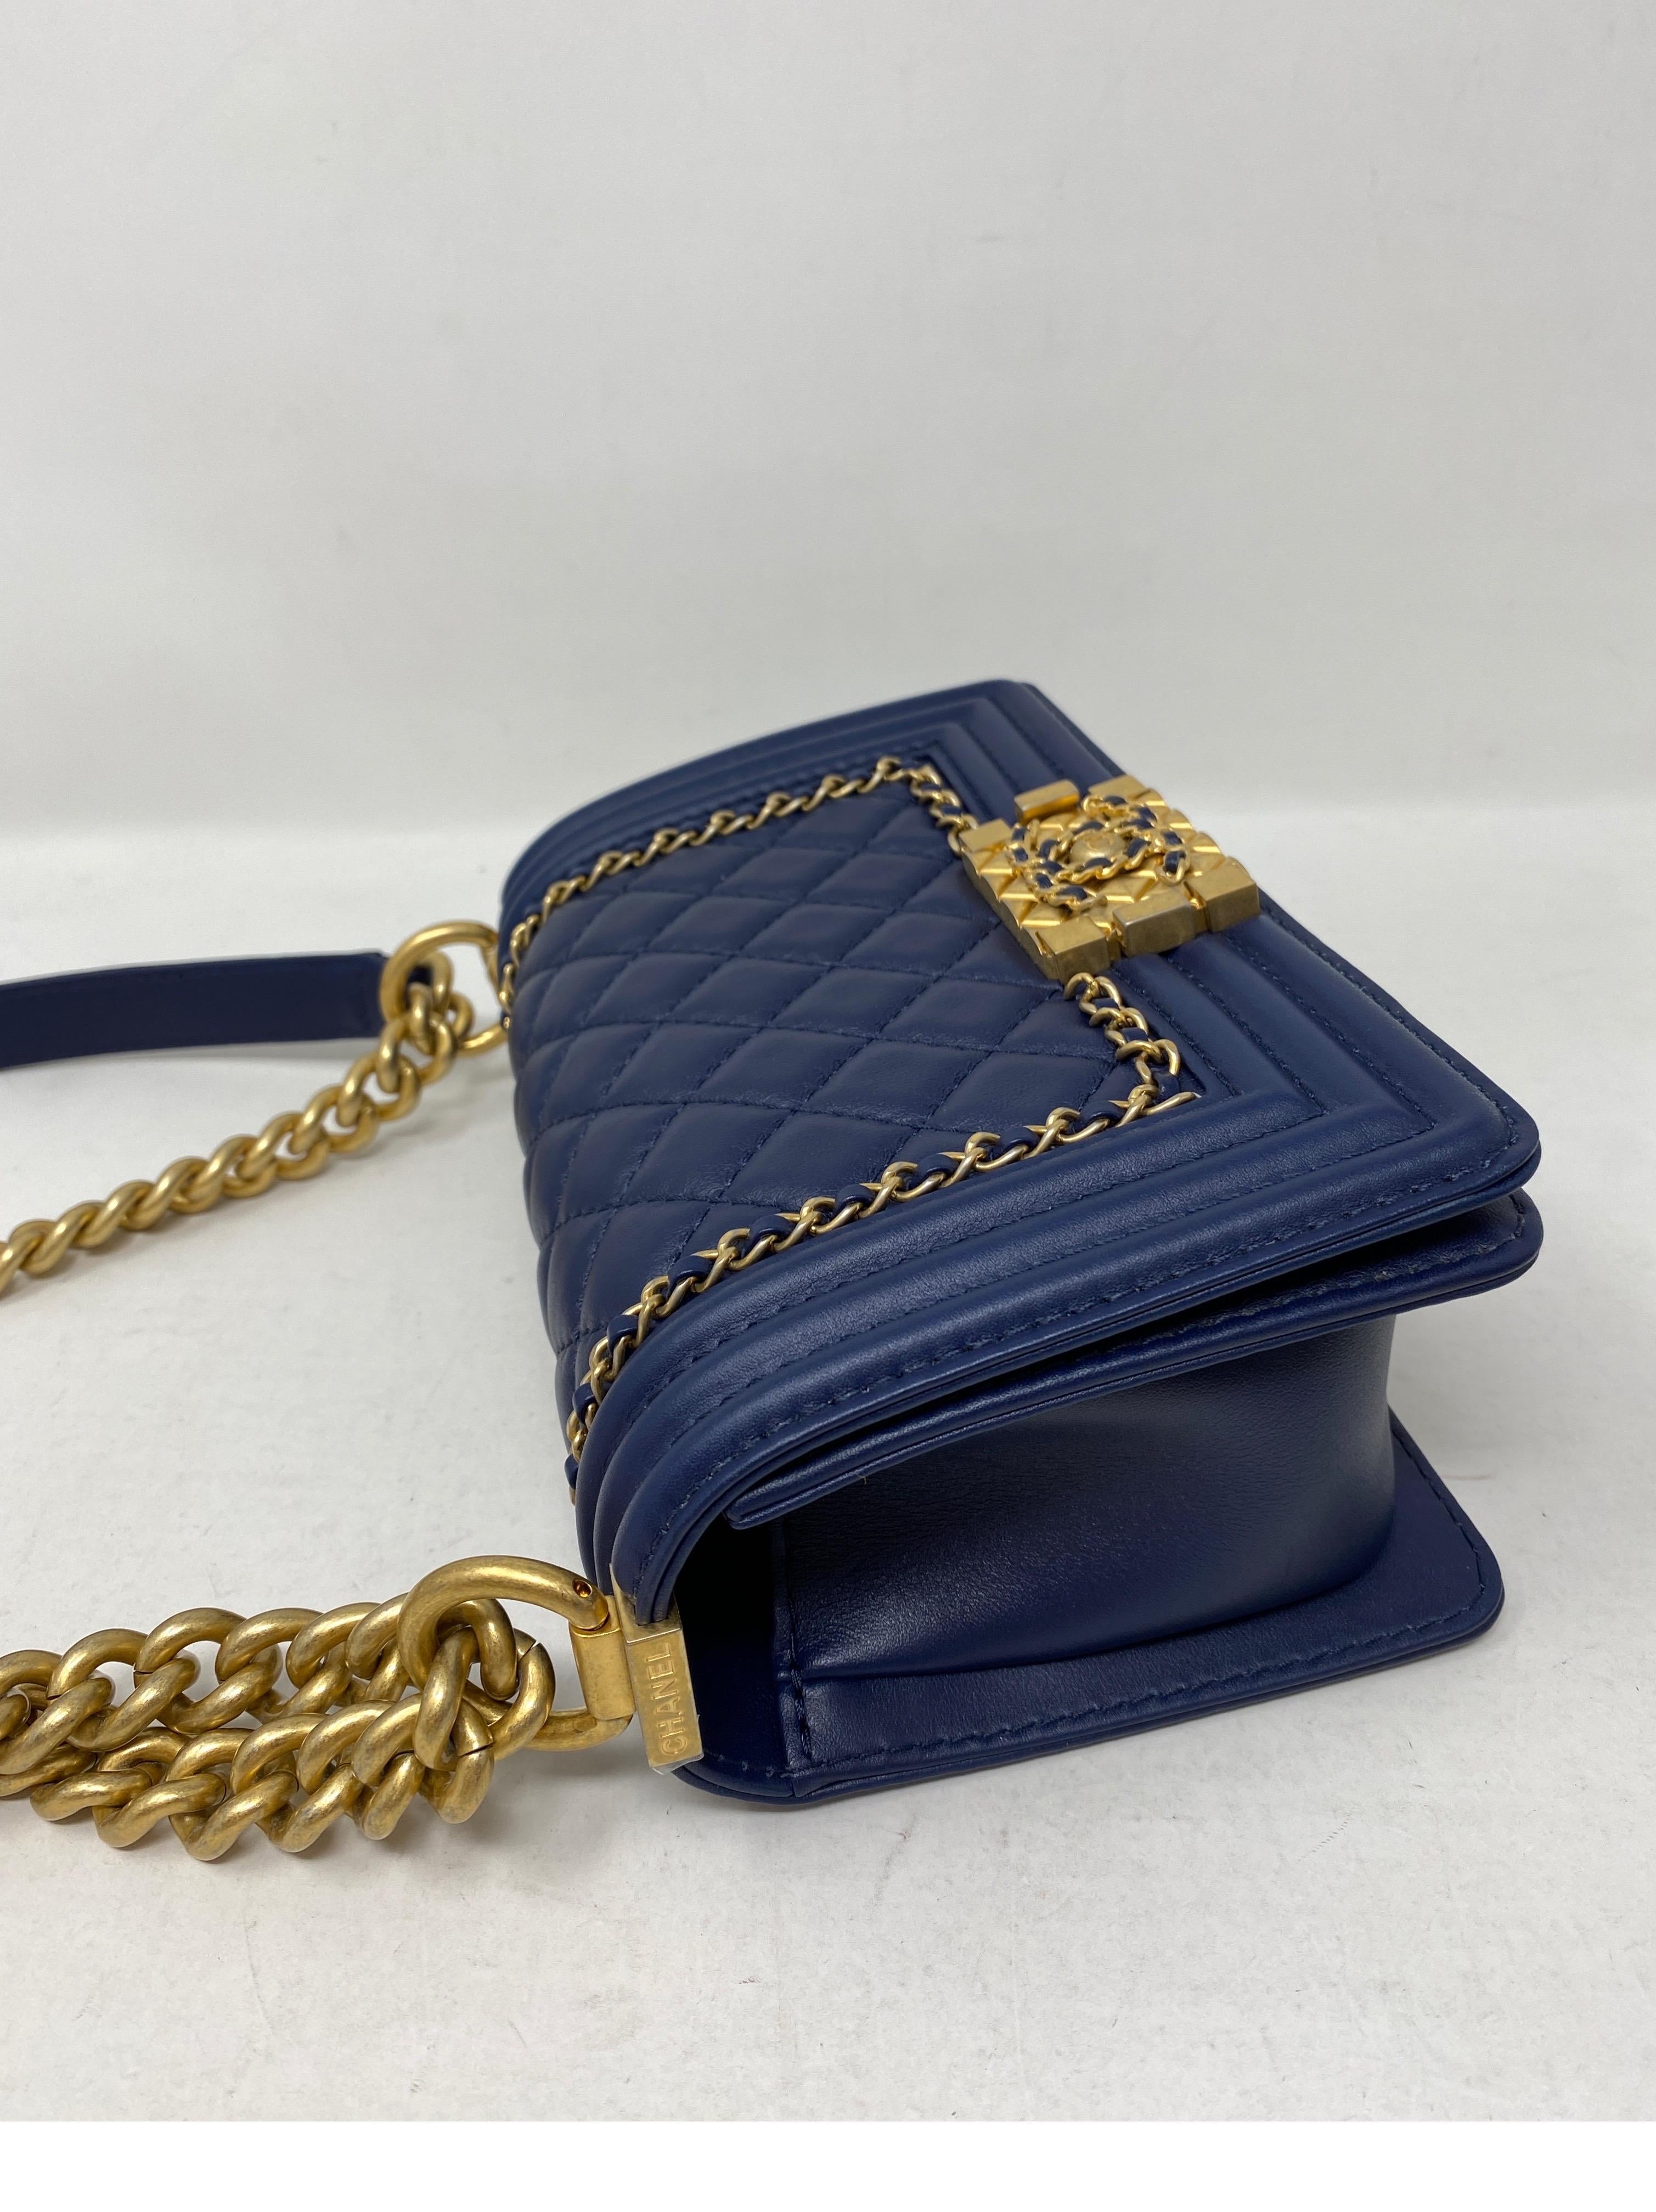 Chanel Mini Boy Limited Edition Navy Bag 1